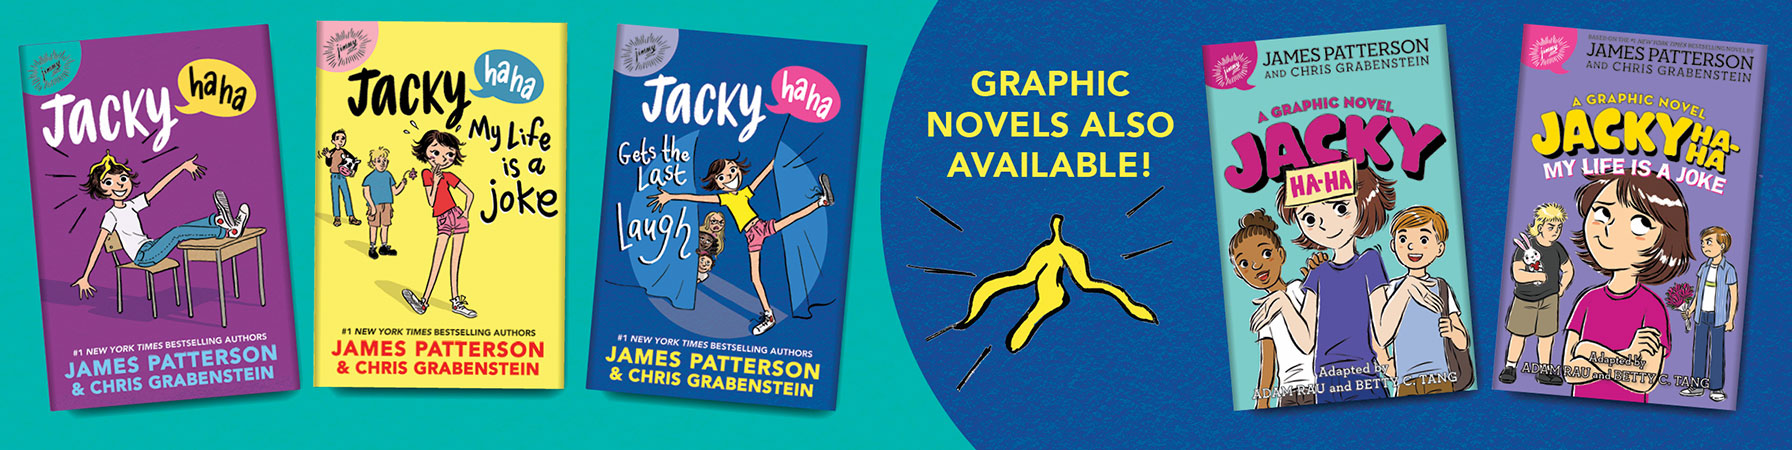 Jacky haha graphic novels also availible